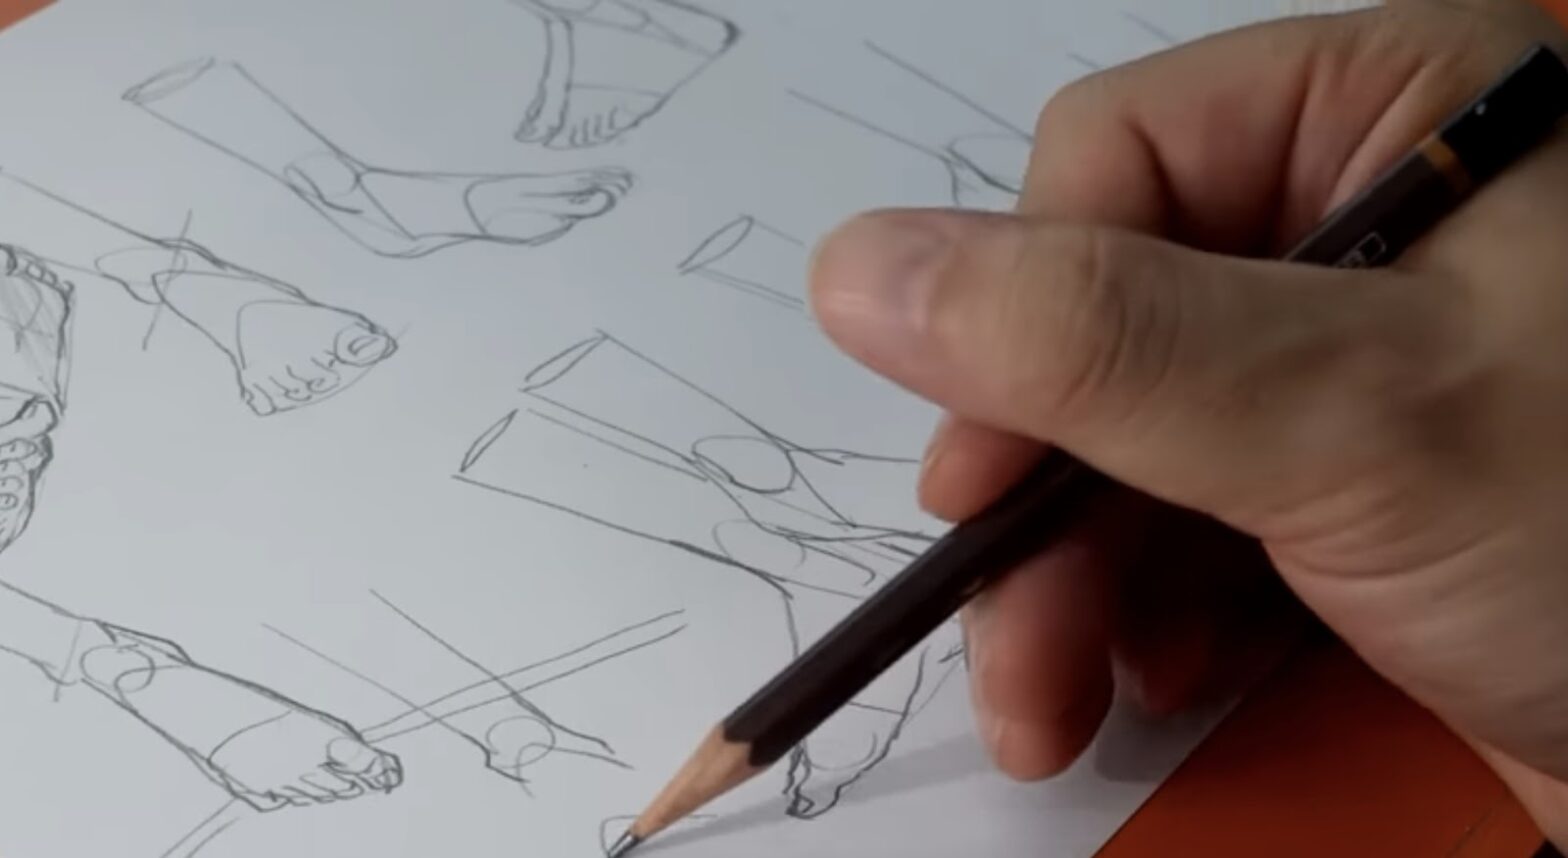 An artist's hand sketching various studies of human feet and hands